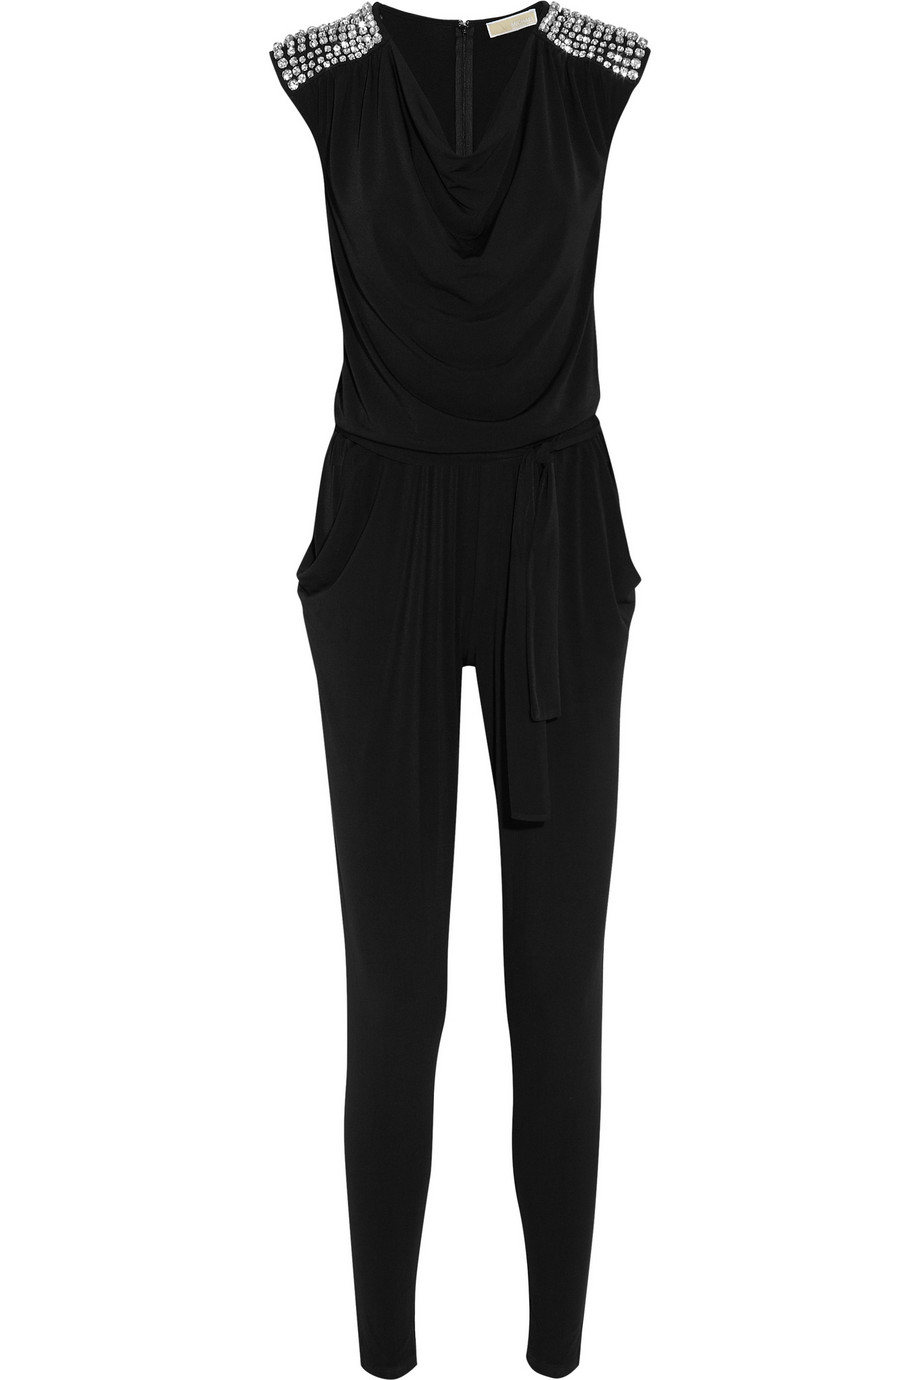 Lyst - Michael Michael Kors Crystal-Embellished Stretch-Jersey Jumpsuit ...